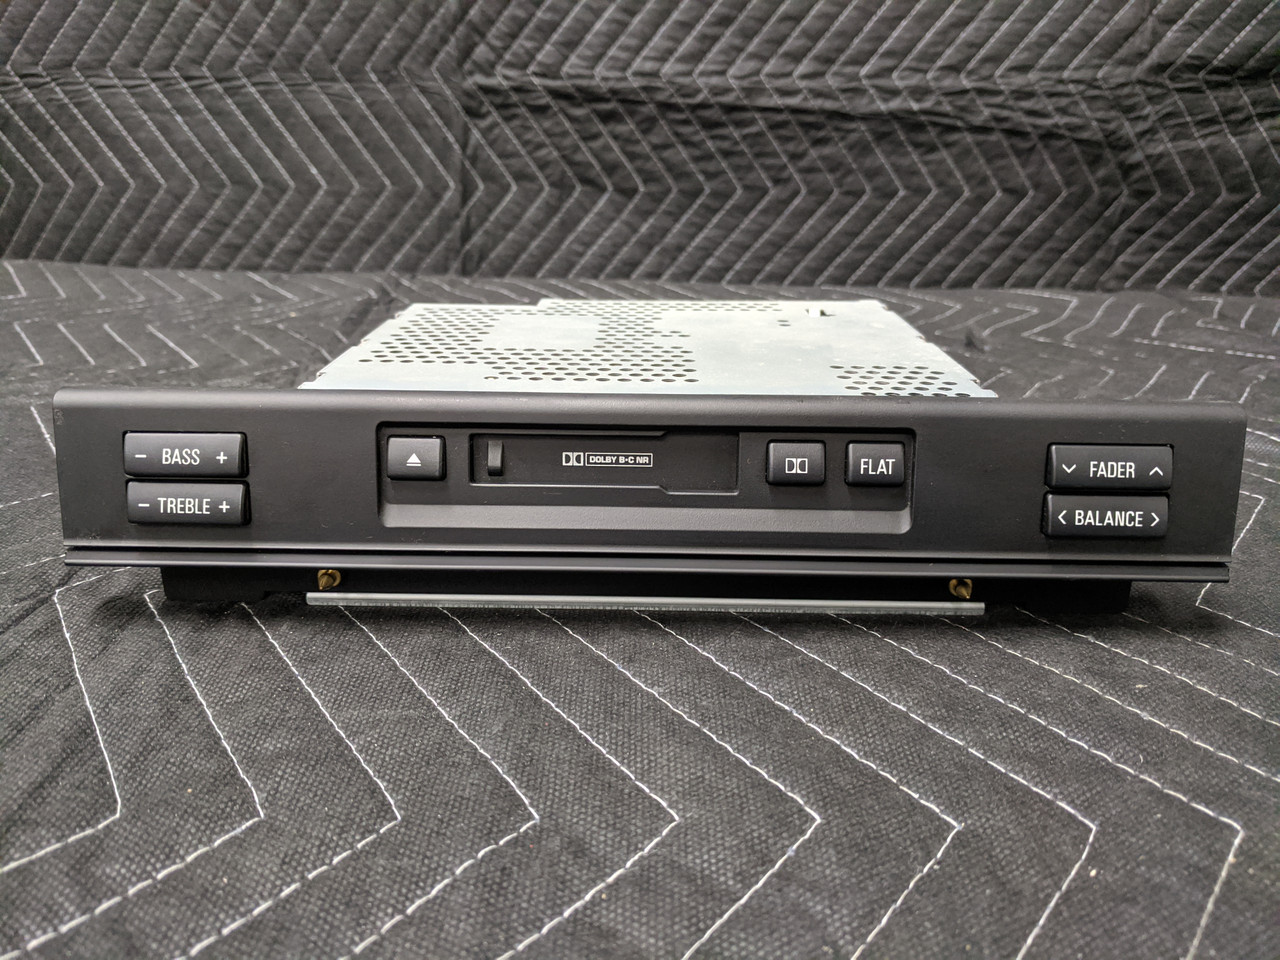 BMW E39/E53 Radio Tape Cassette Player 65128360800